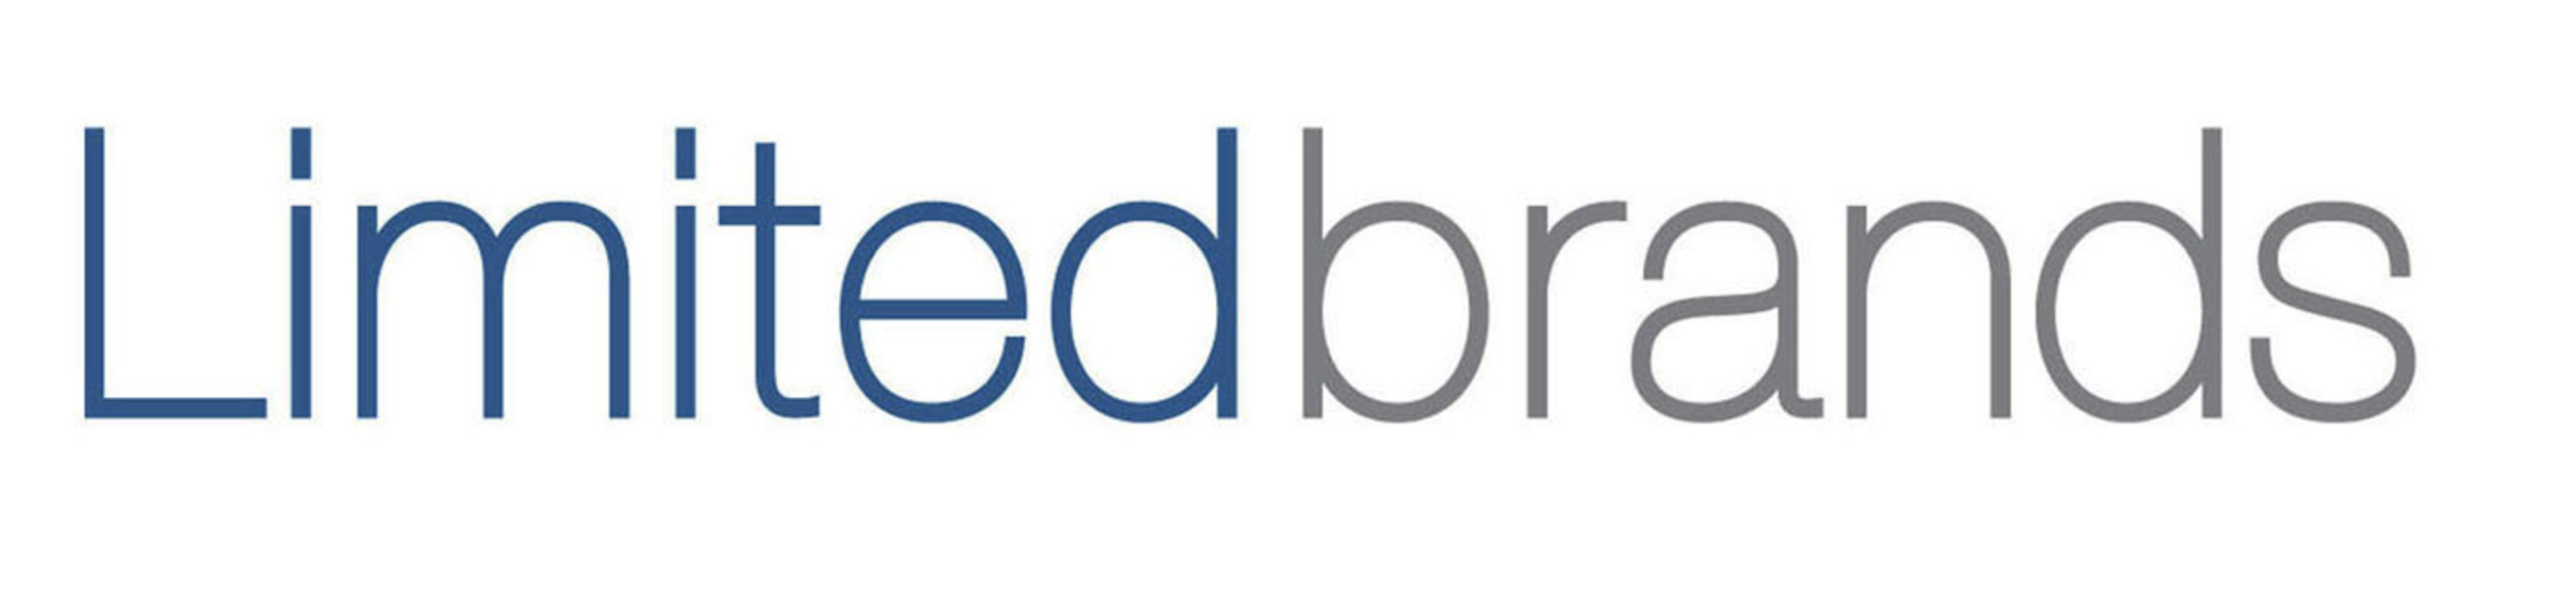 Limited Brands logo. (PRNewsFoto/Limited Brands) (PRNewsFoto/)